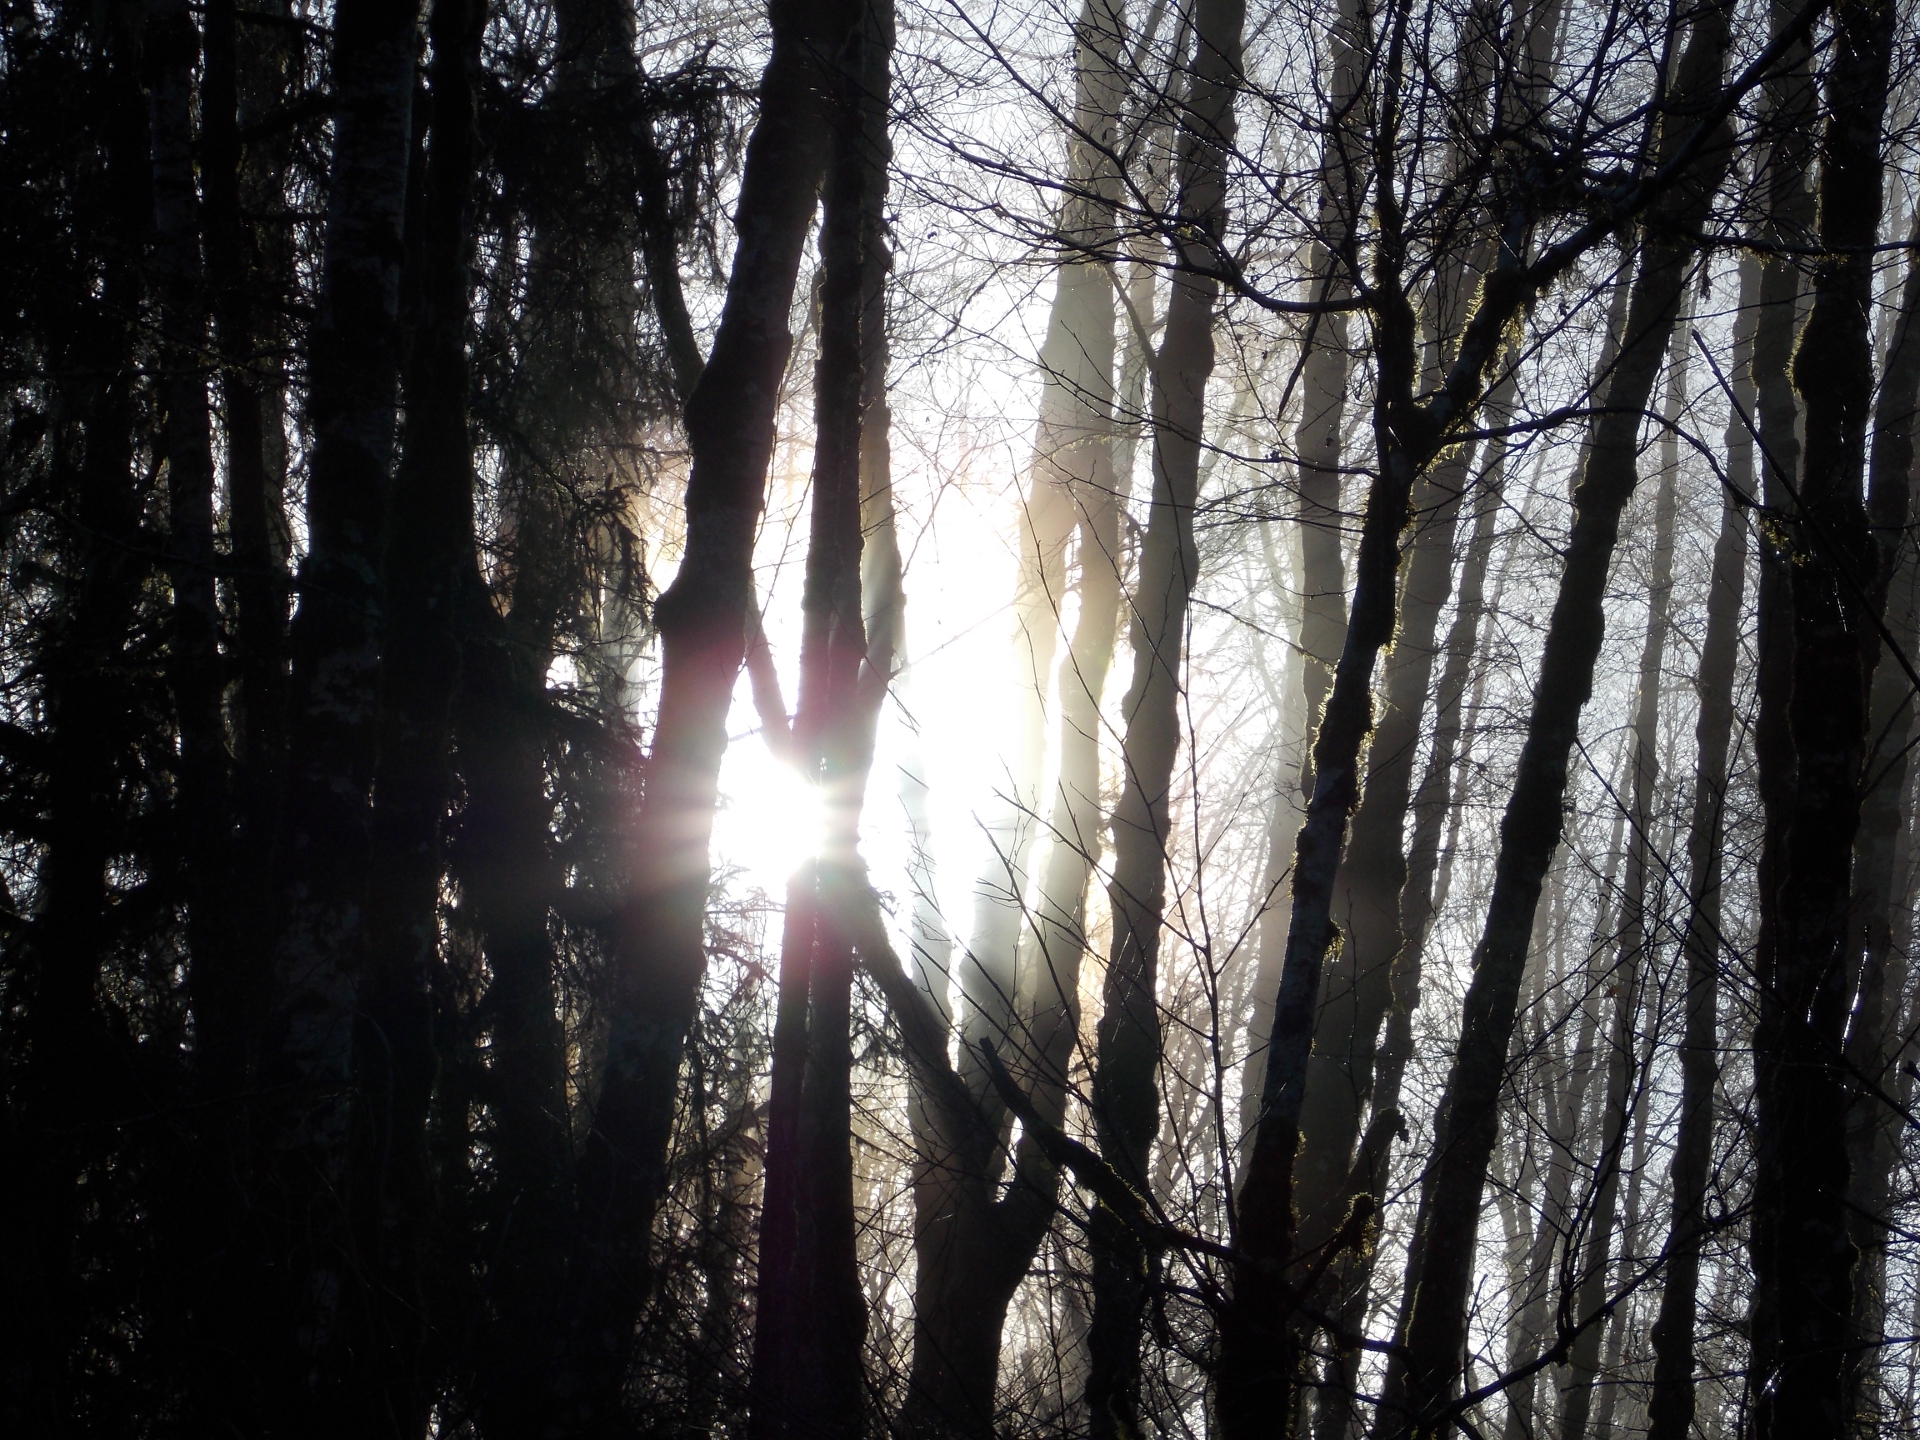 Wordless Wednesday: Sunlight Through The Trees